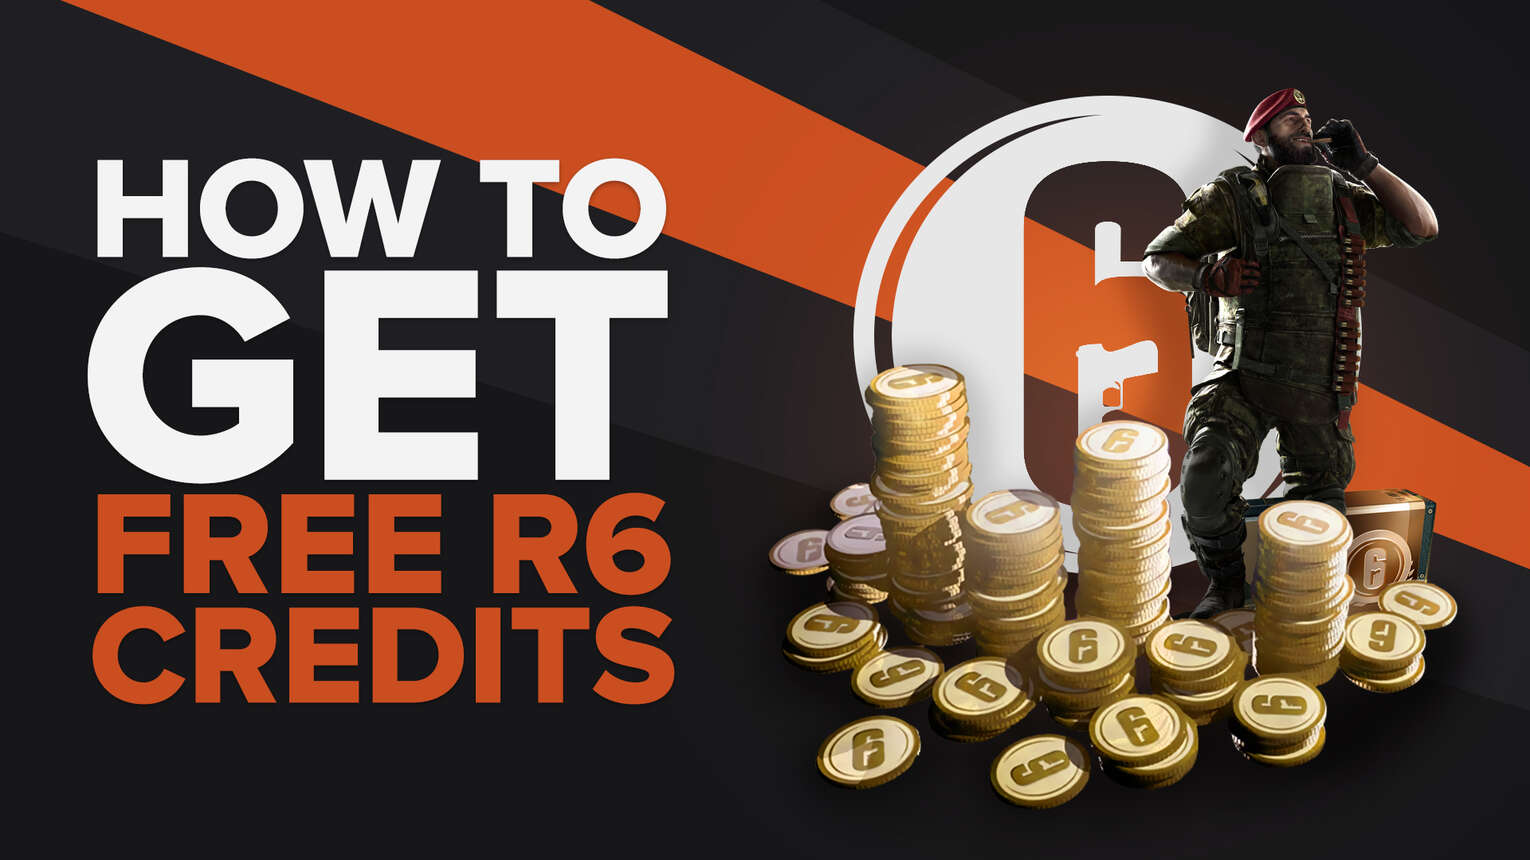 How to Get Free R6 Credits (3 Legit Ways)